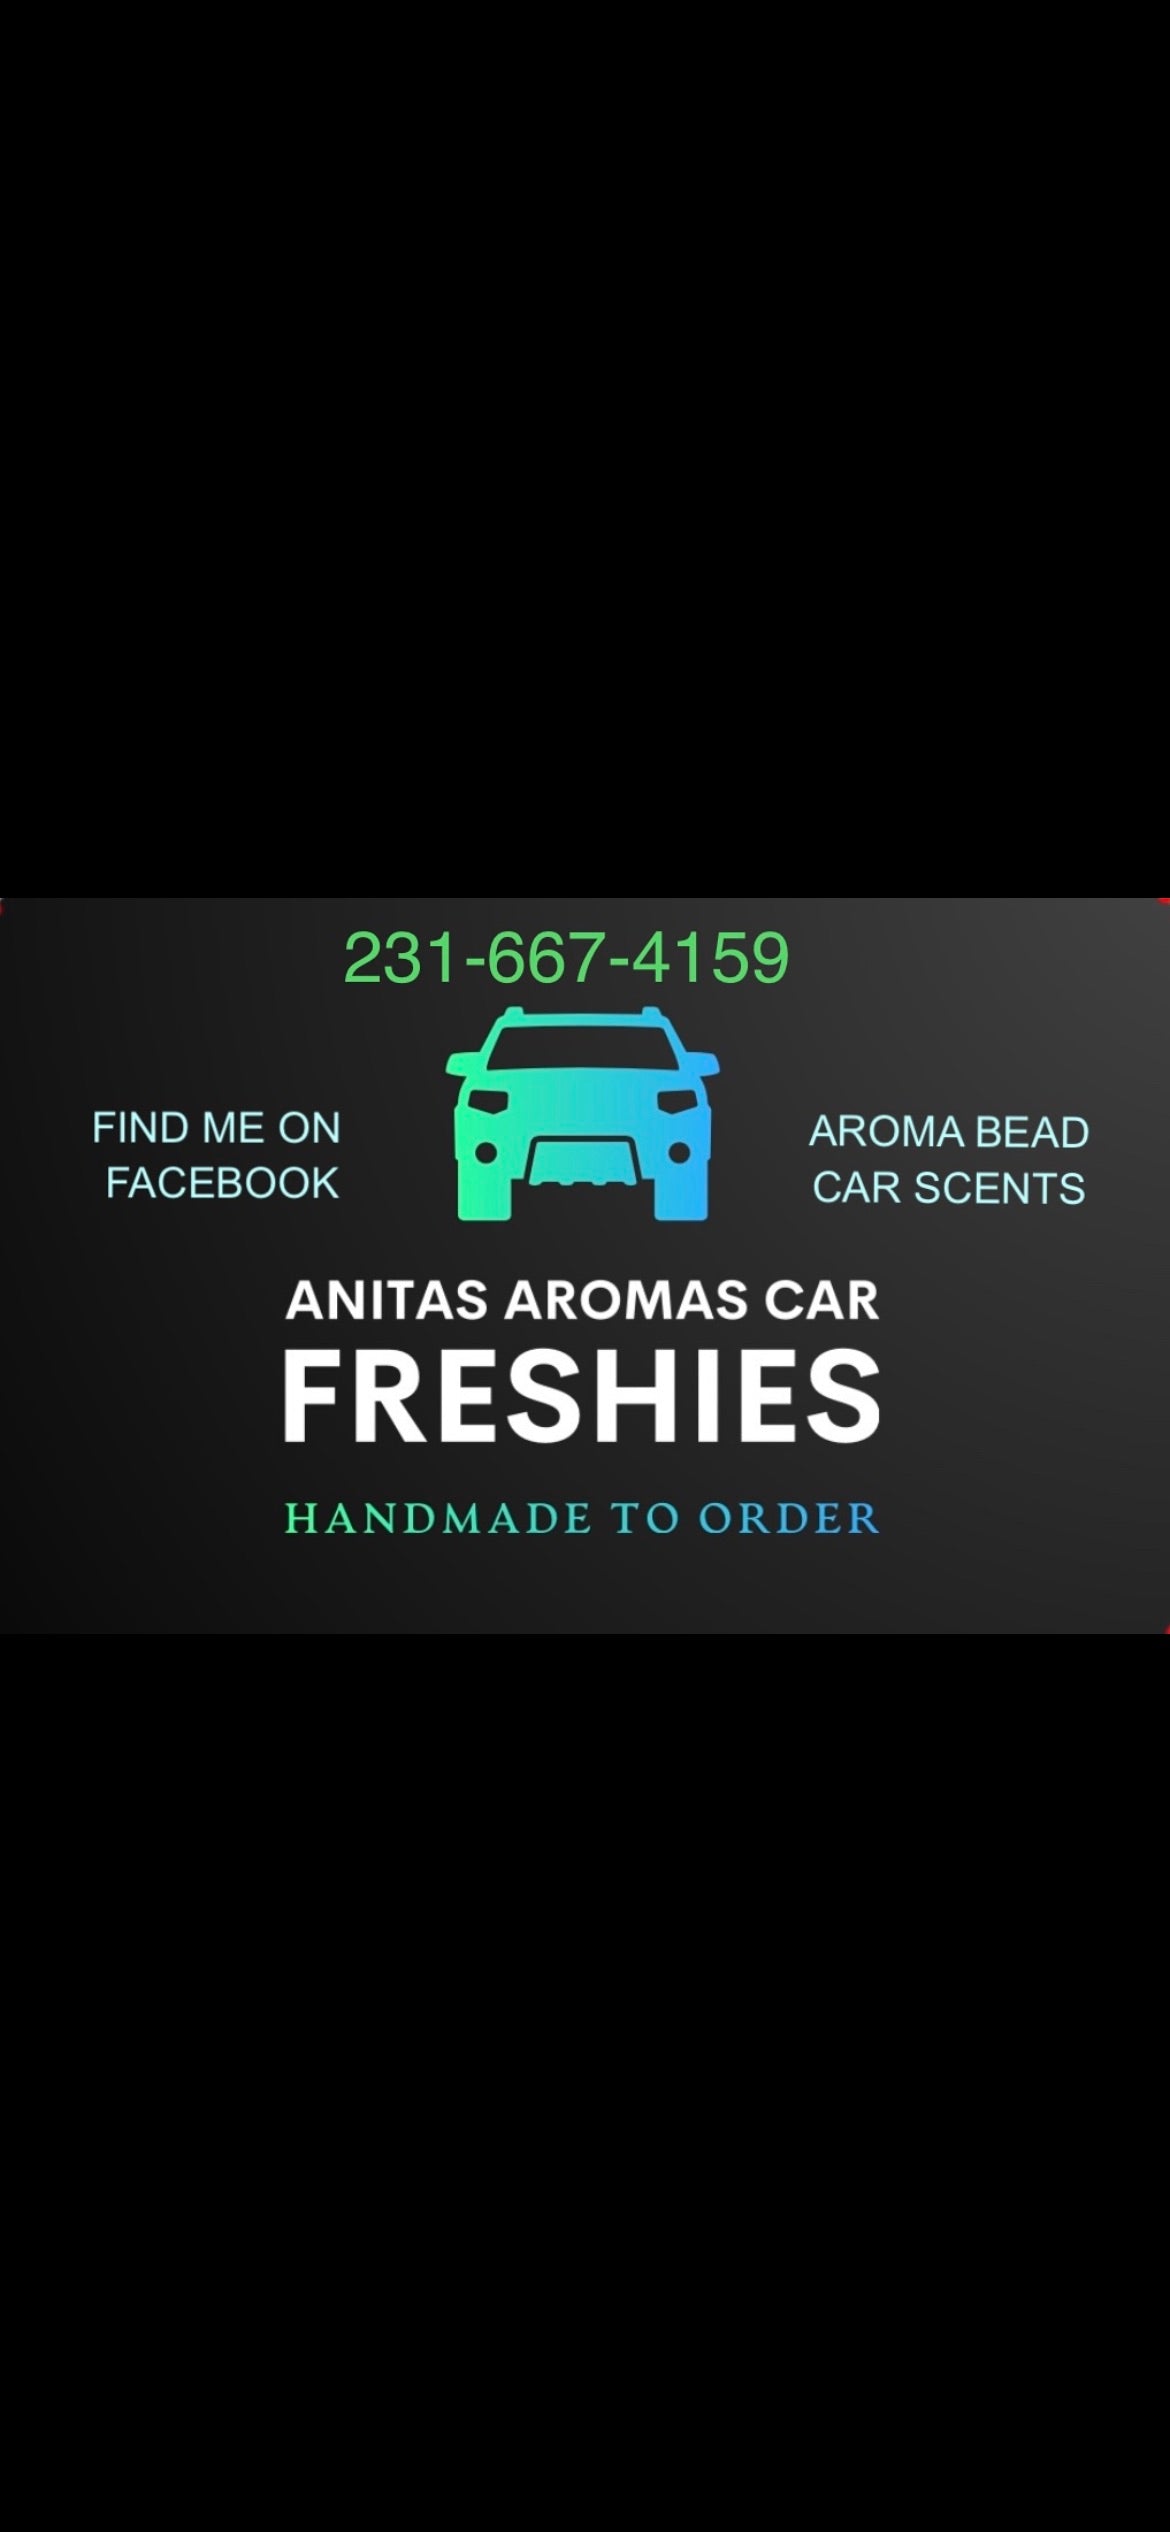 Aroma bead car fresheners